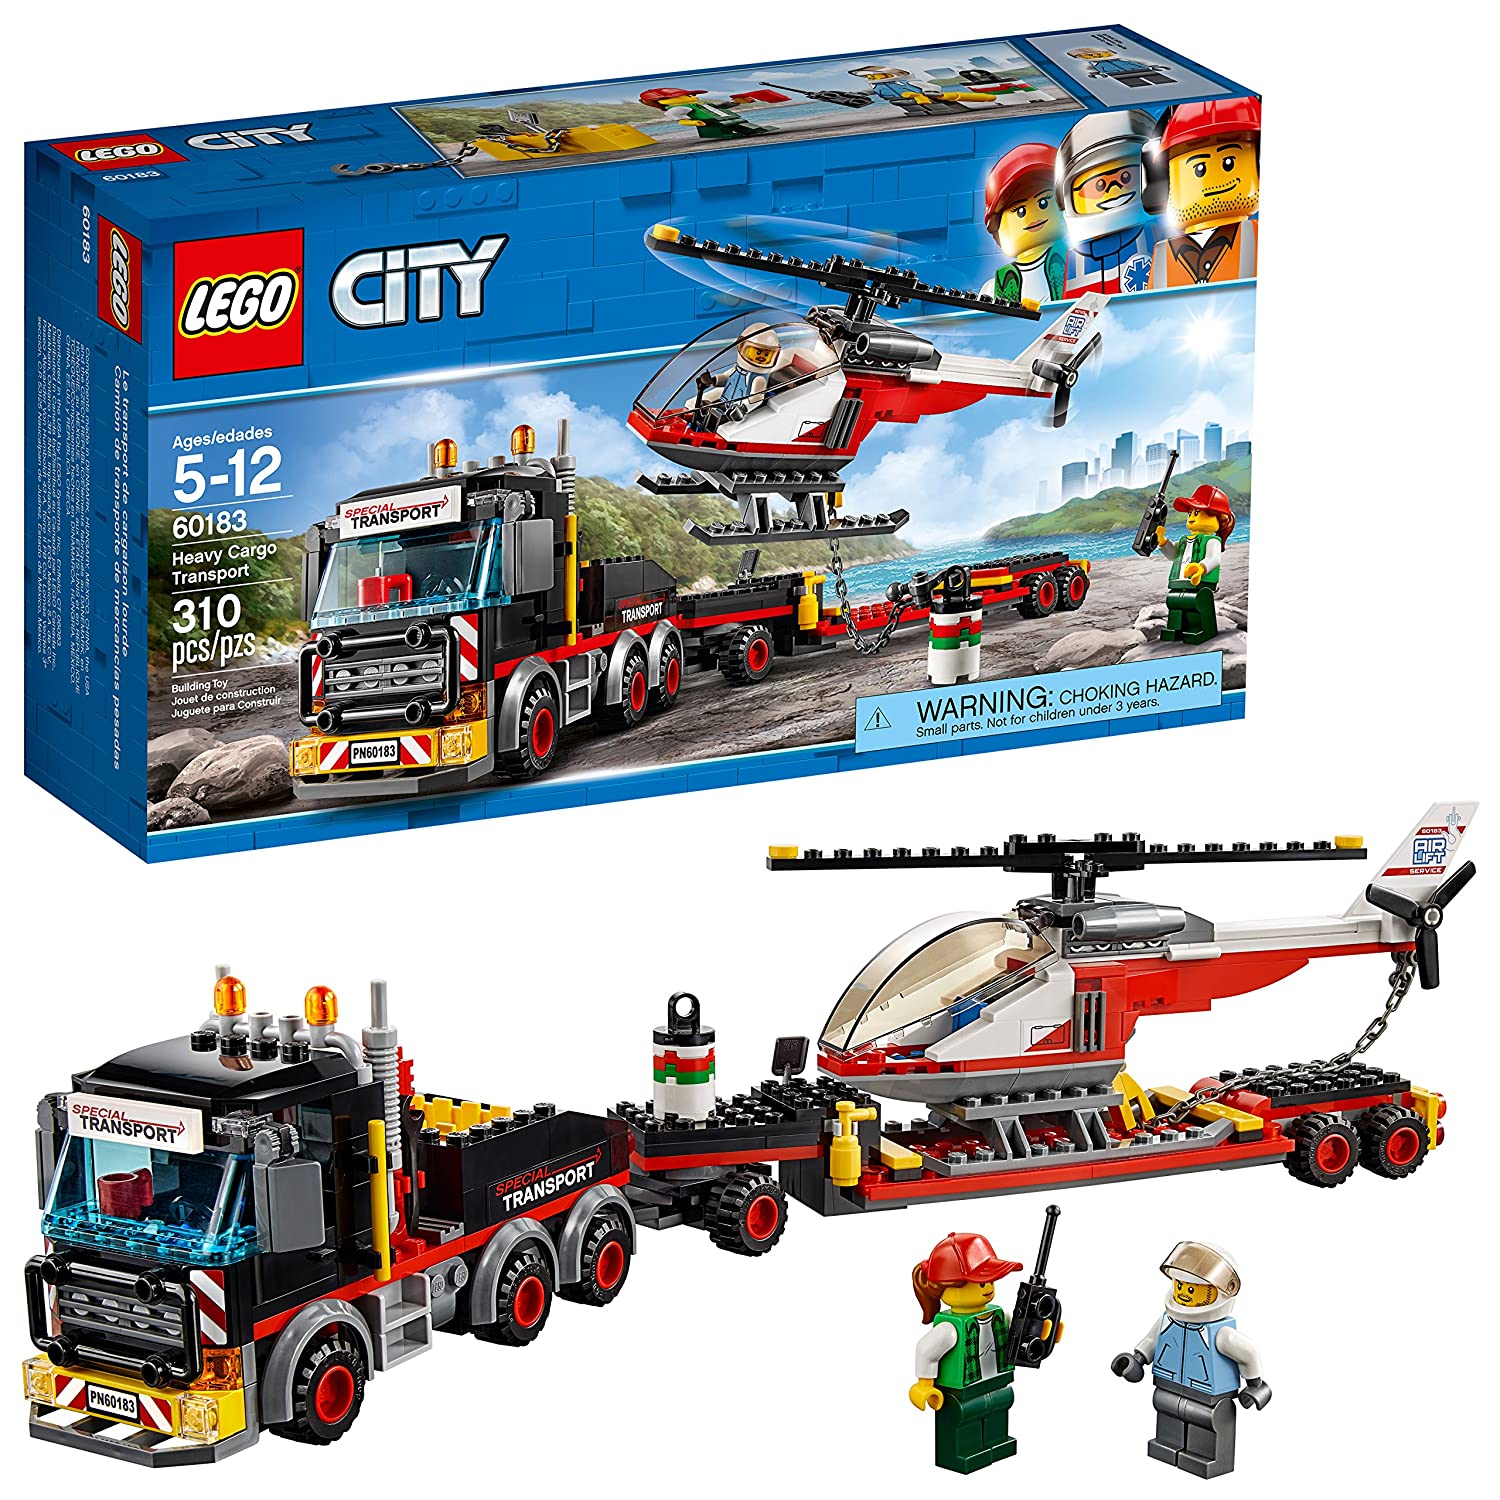 LEGO City Heavy Cargo Transport 60183 Building Kit (310 Pieces)